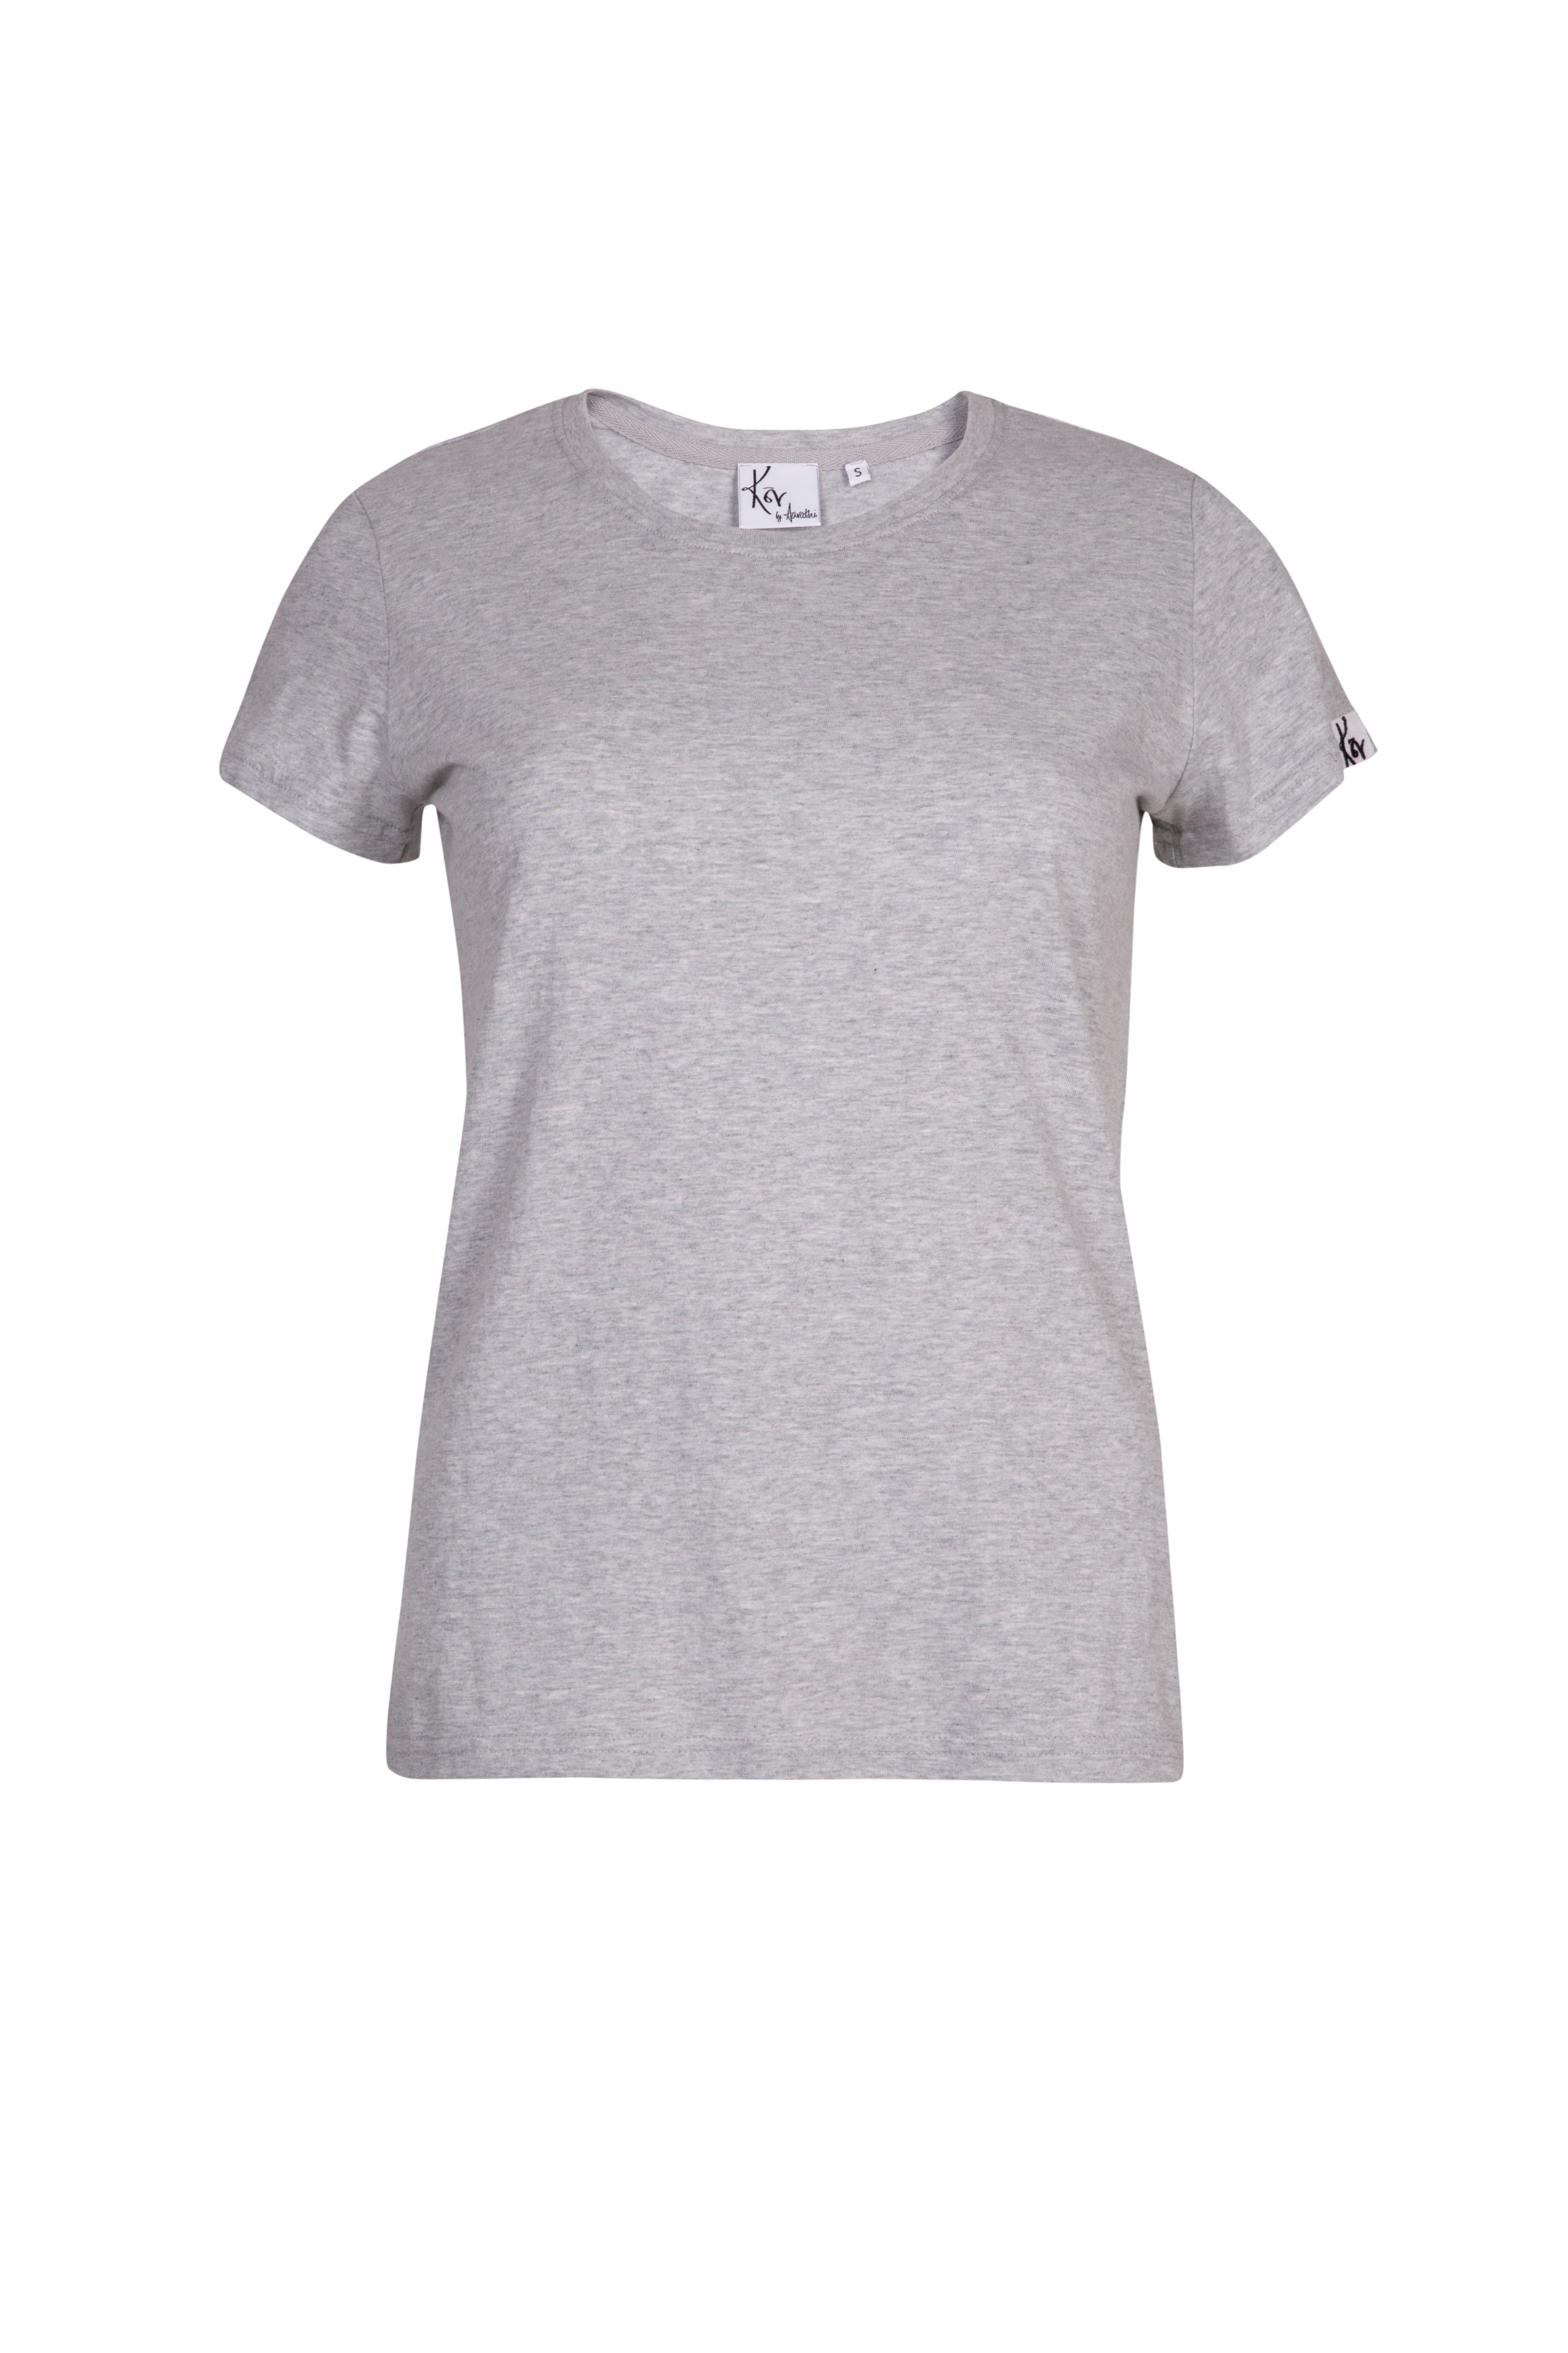 Grey organic cotton women's basic fit t-shirt 